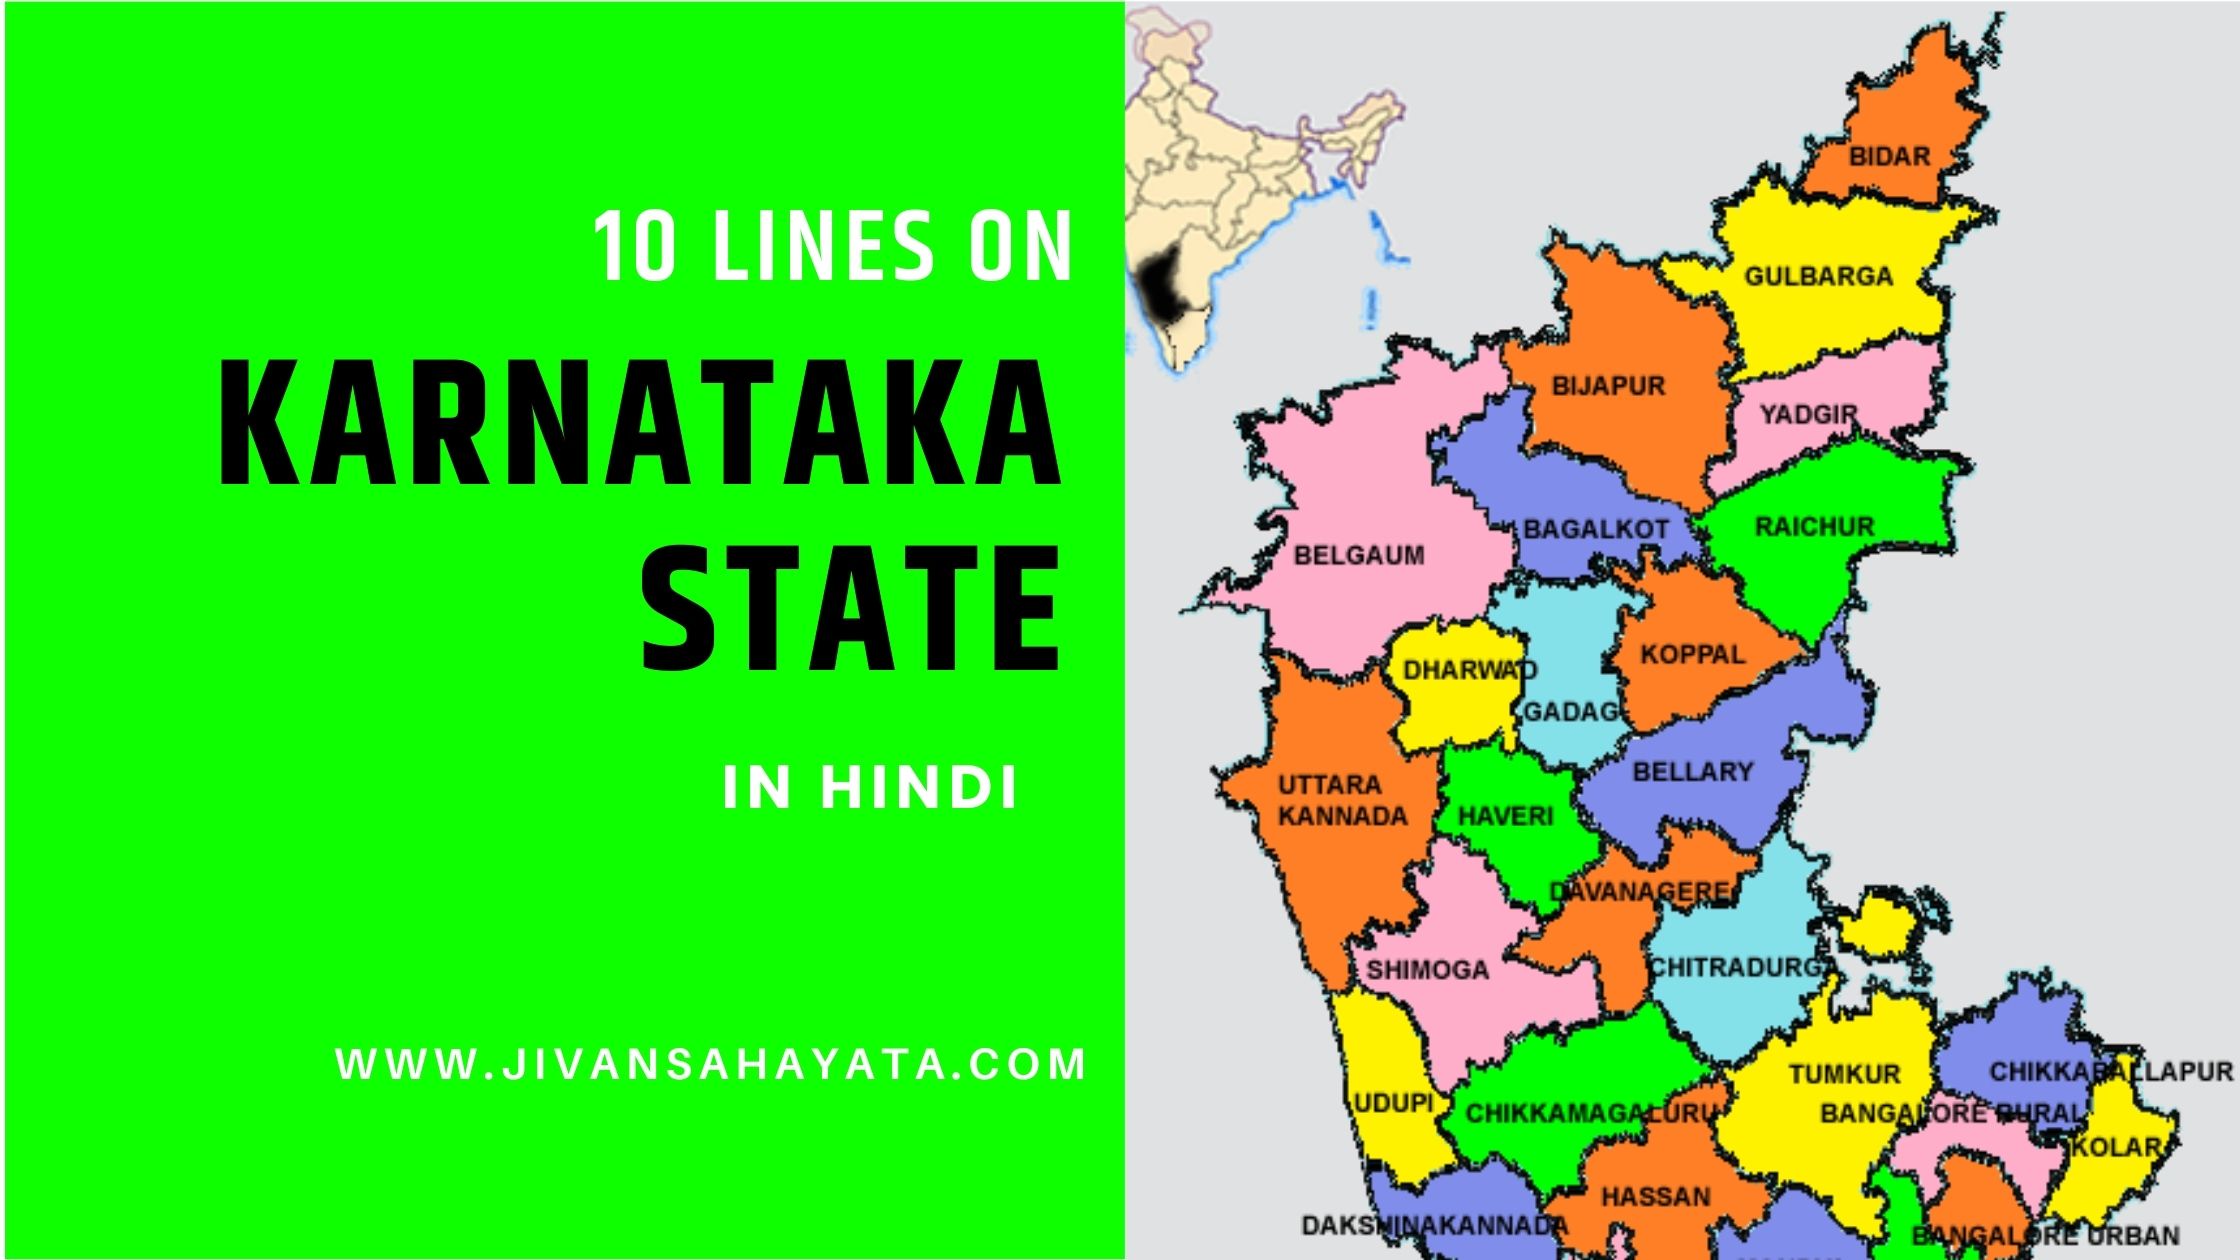 10 lines about Karnataka State in Hindi